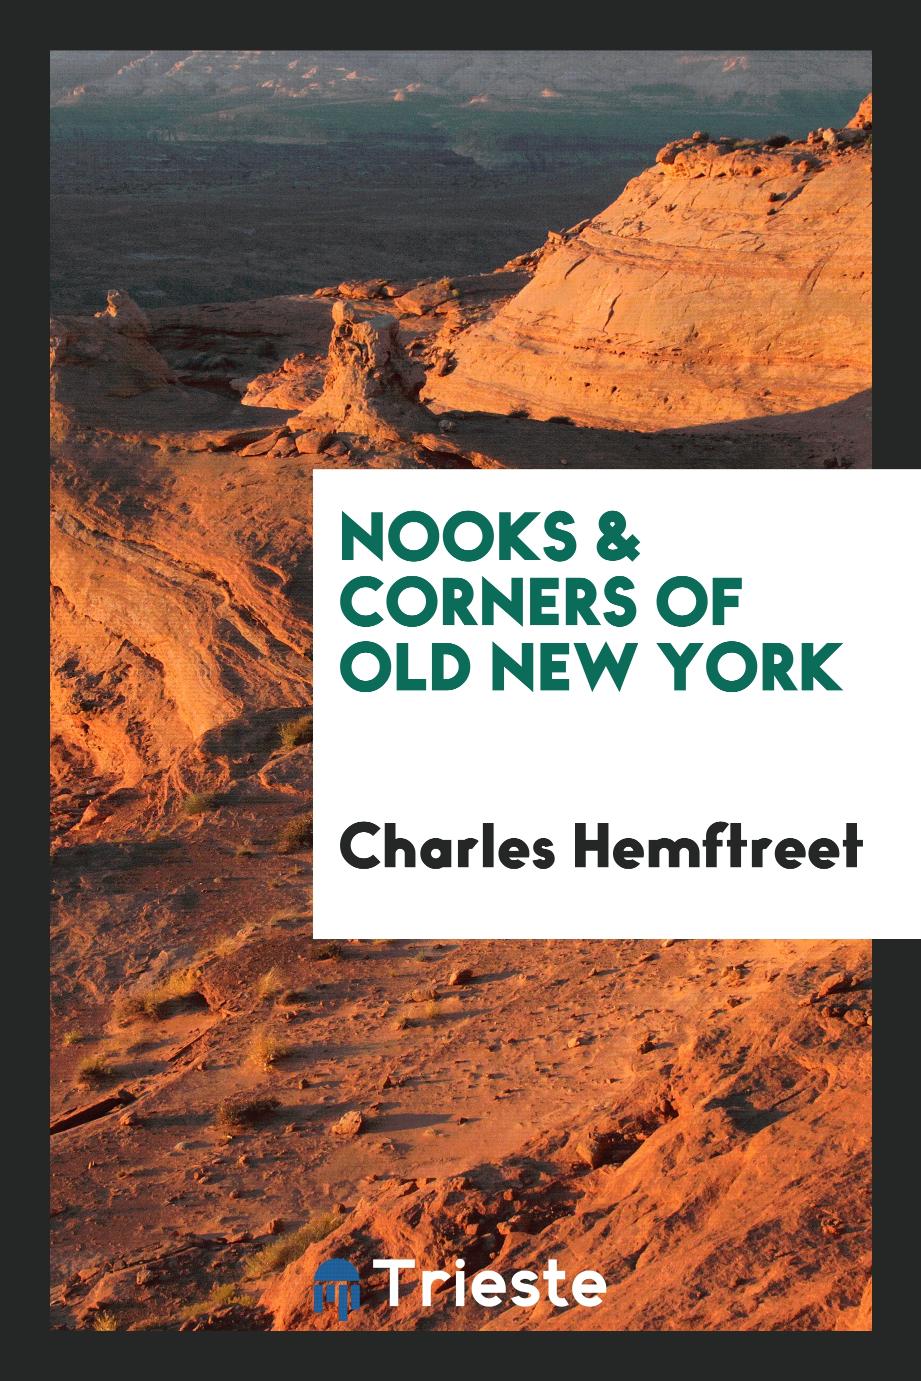 Nooks & corners of old New York